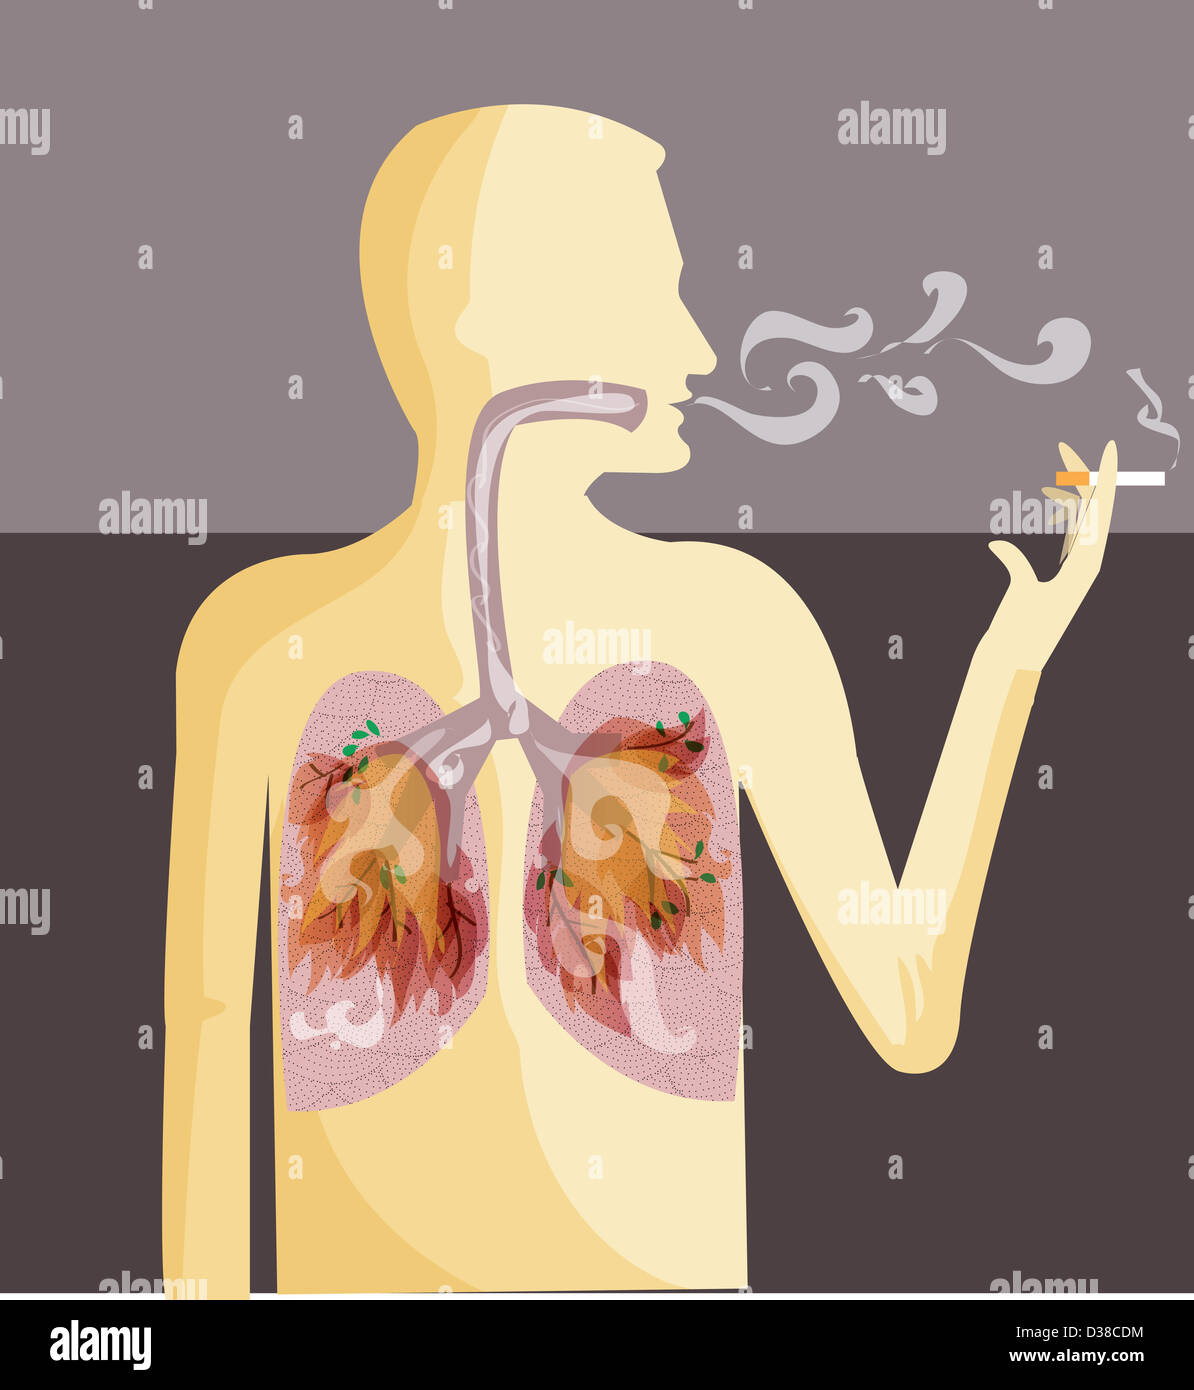 Illustrative image of human representation smoking cigarette depicting lung cancer Stock Photo